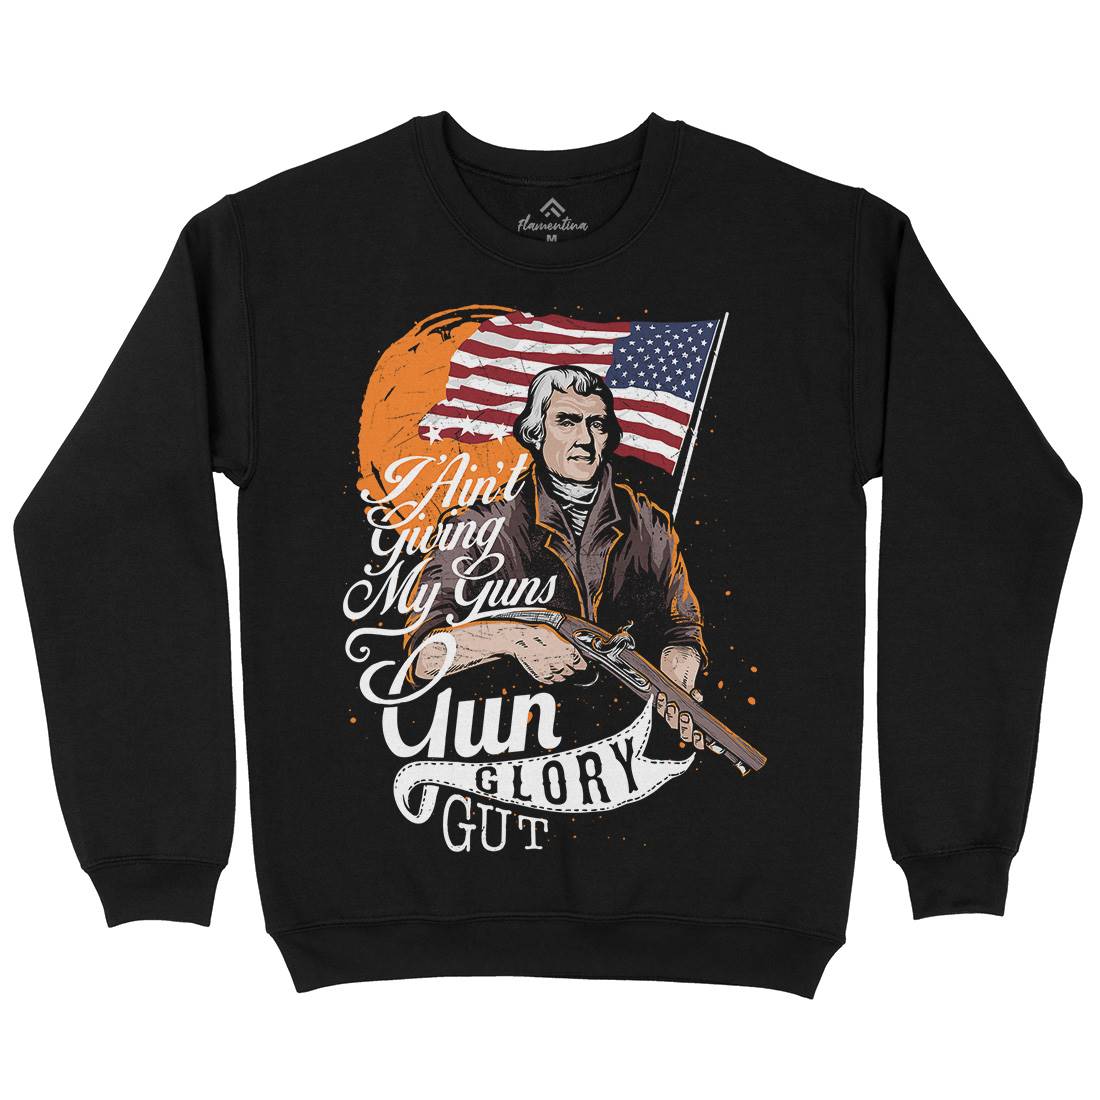 Gun Glory Gut Kids Crew Neck Sweatshirt American C940